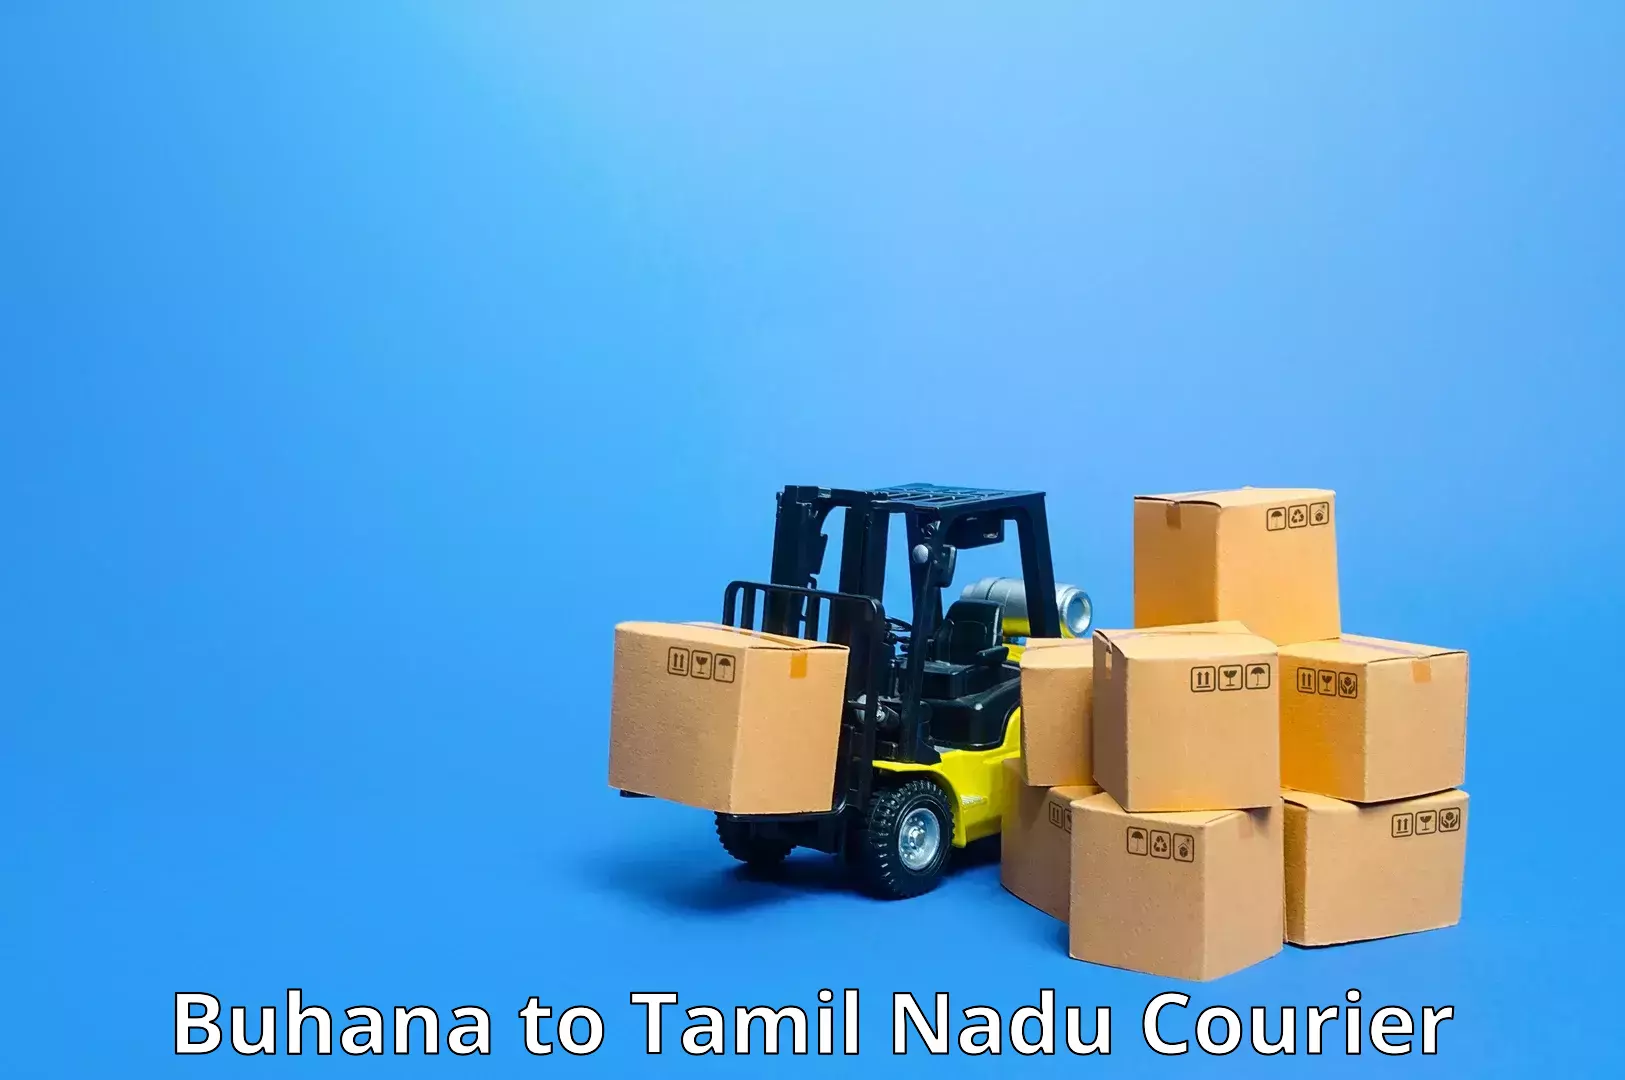 Rapid freight solutions Buhana to Tamil Nadu